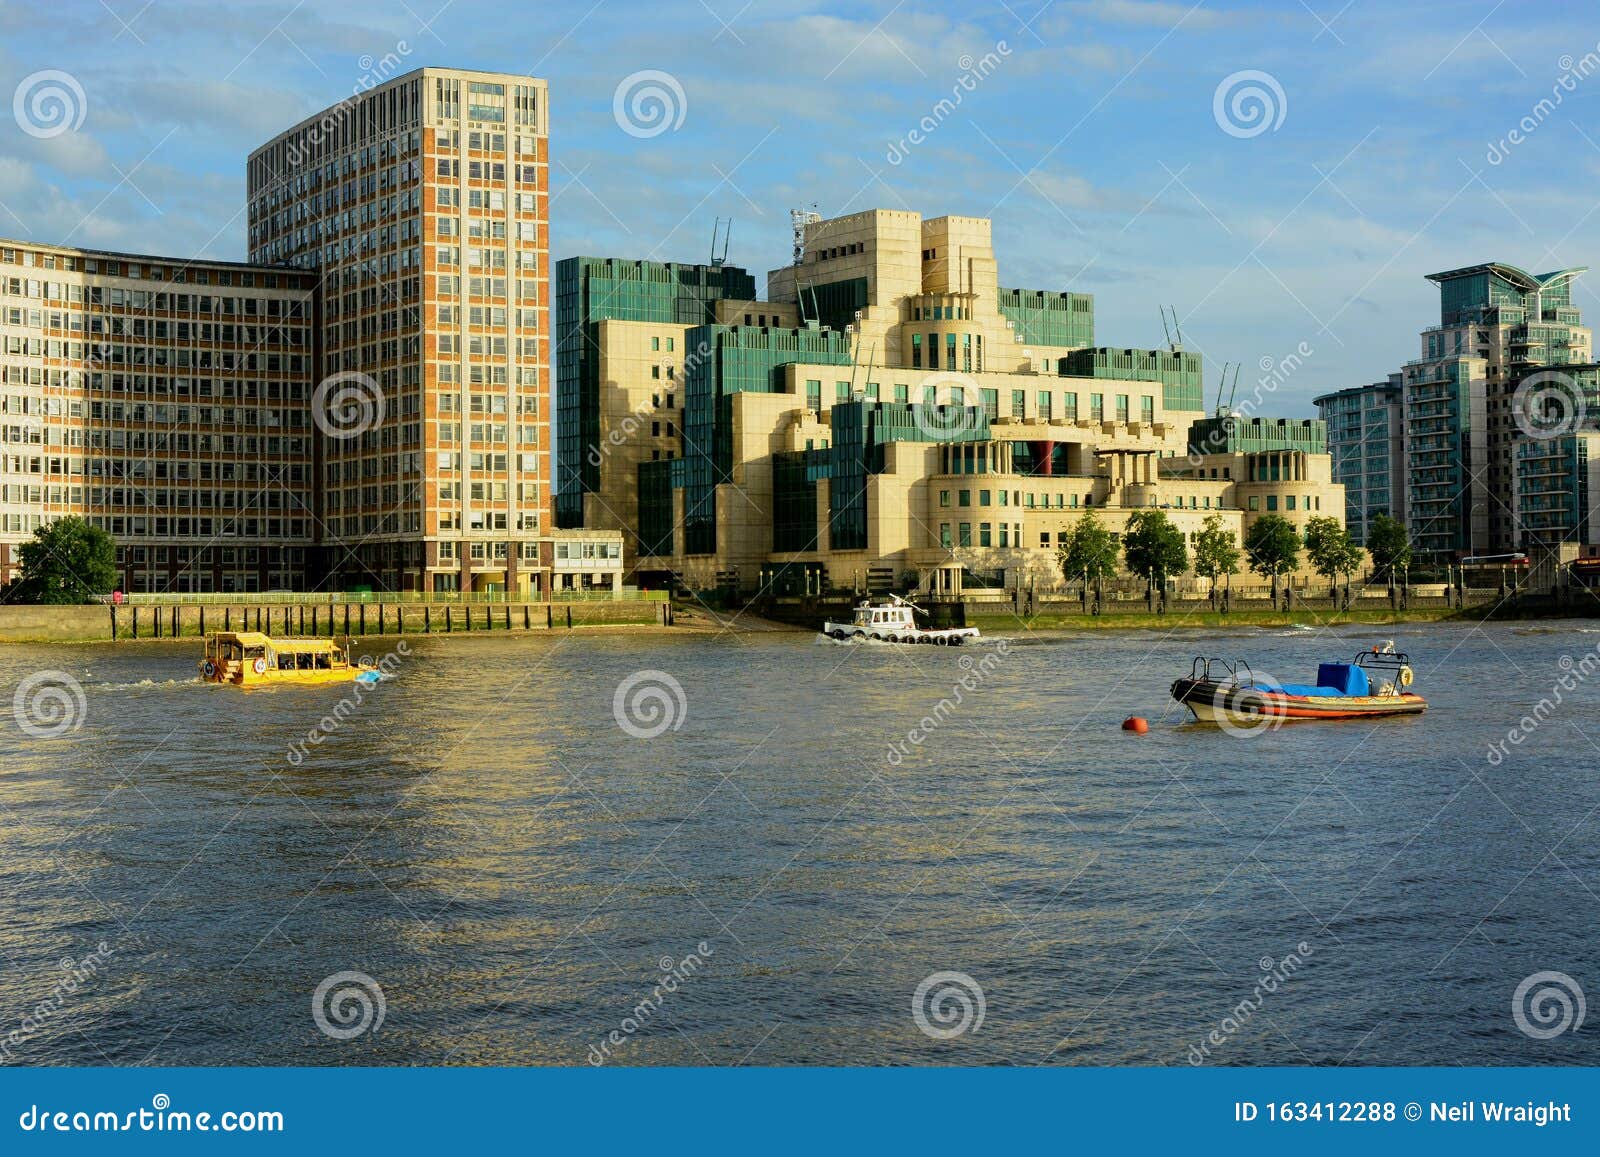 Secret Intelligence Service Or MI6 Building. London. UK ...